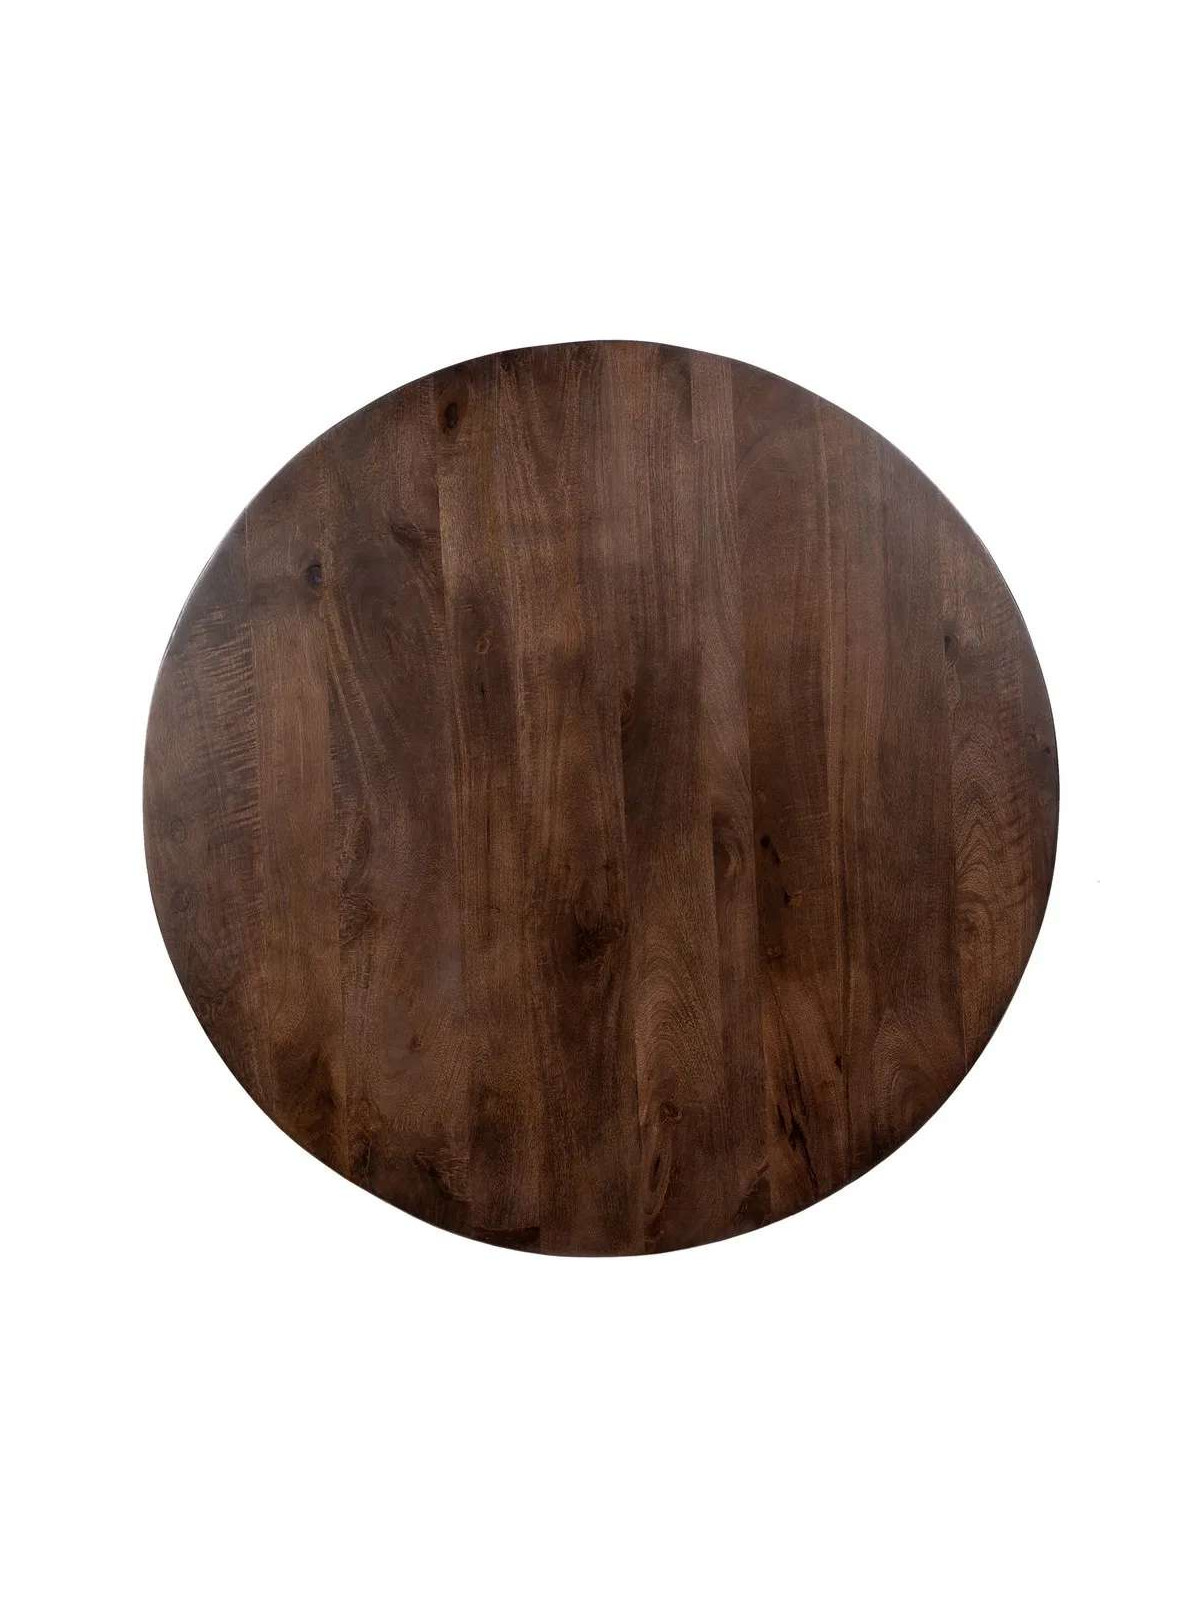 Table à manger ronde en bois de manguier massif Davis - GdeGdesign